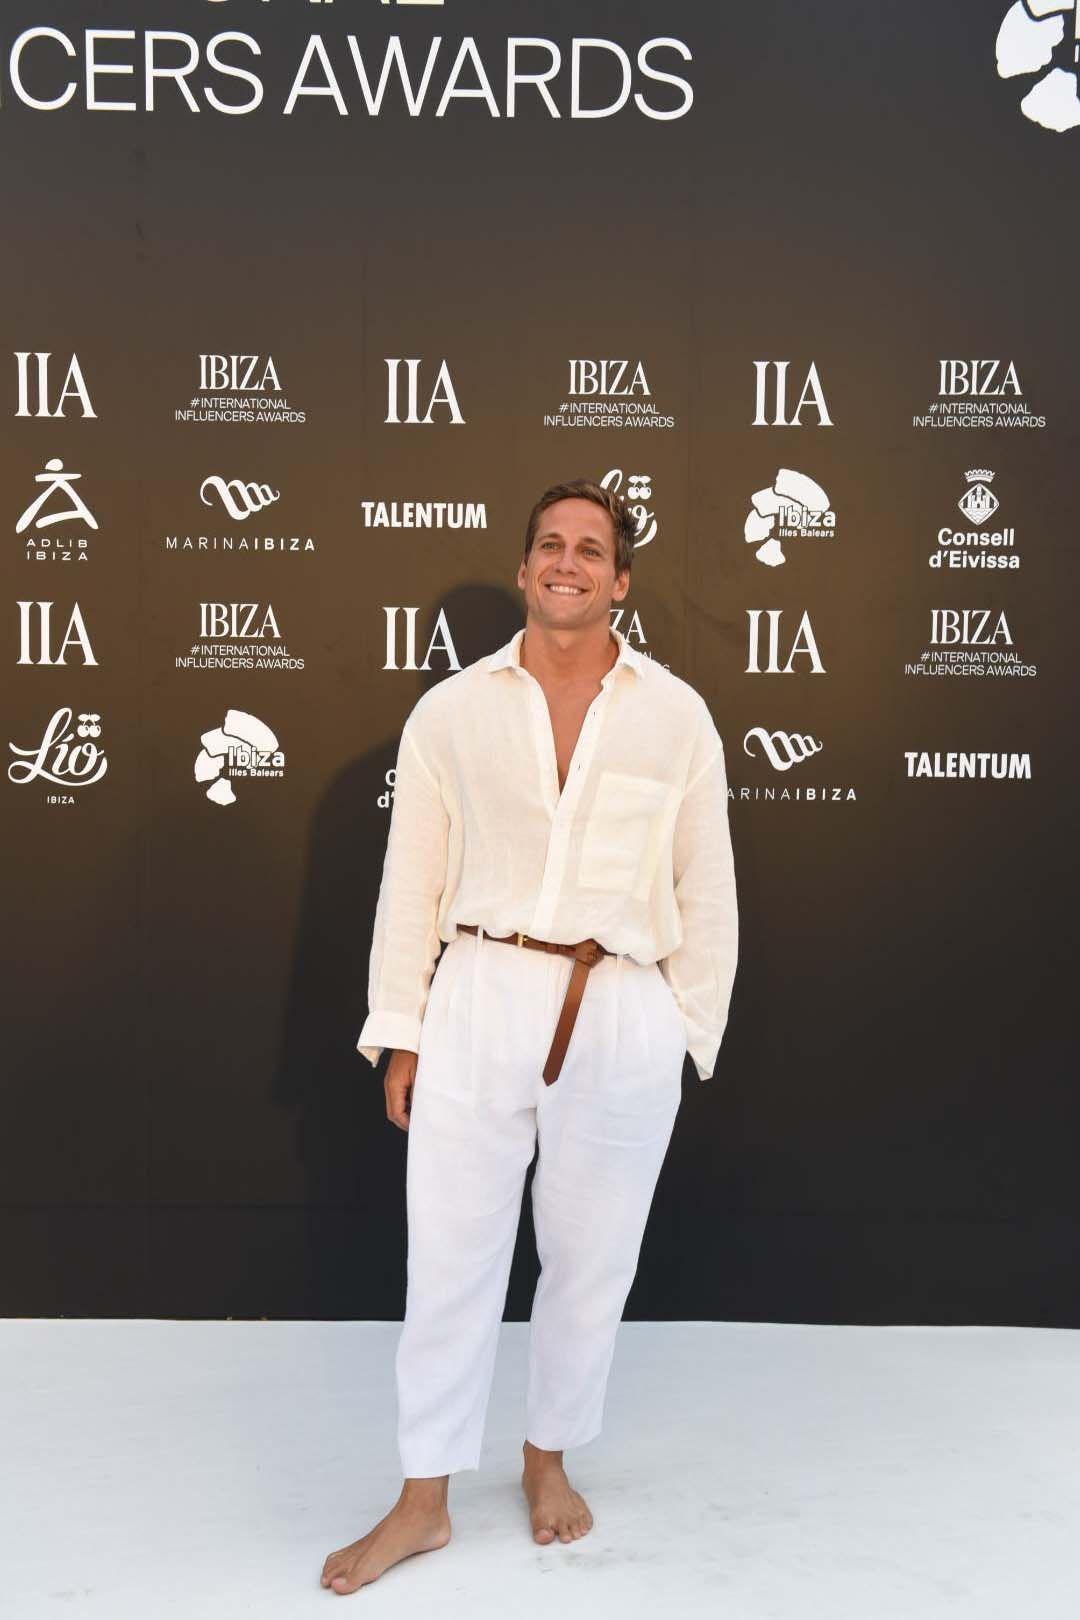 International Influencers Awards en Ibiza